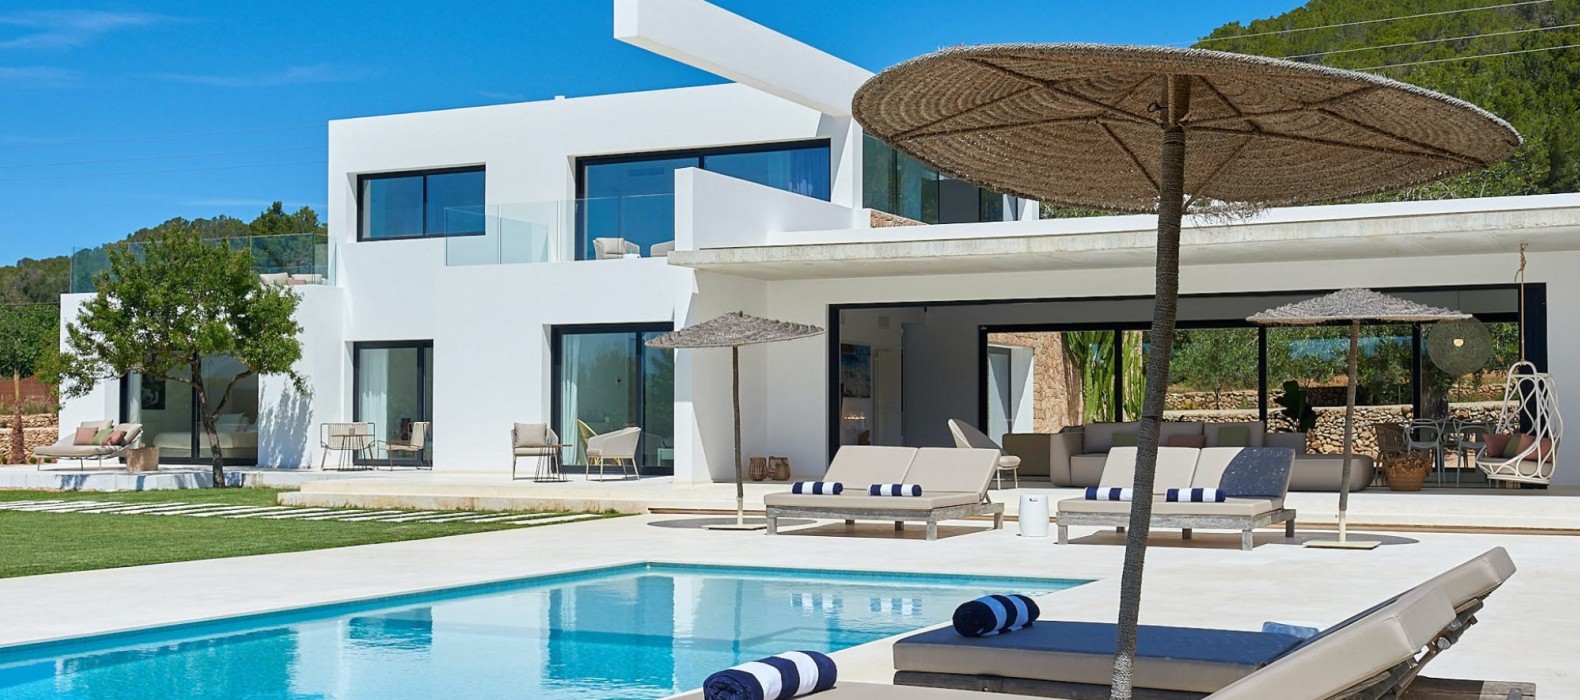 Exterior pool and villa view of Villa White Light Ibiza